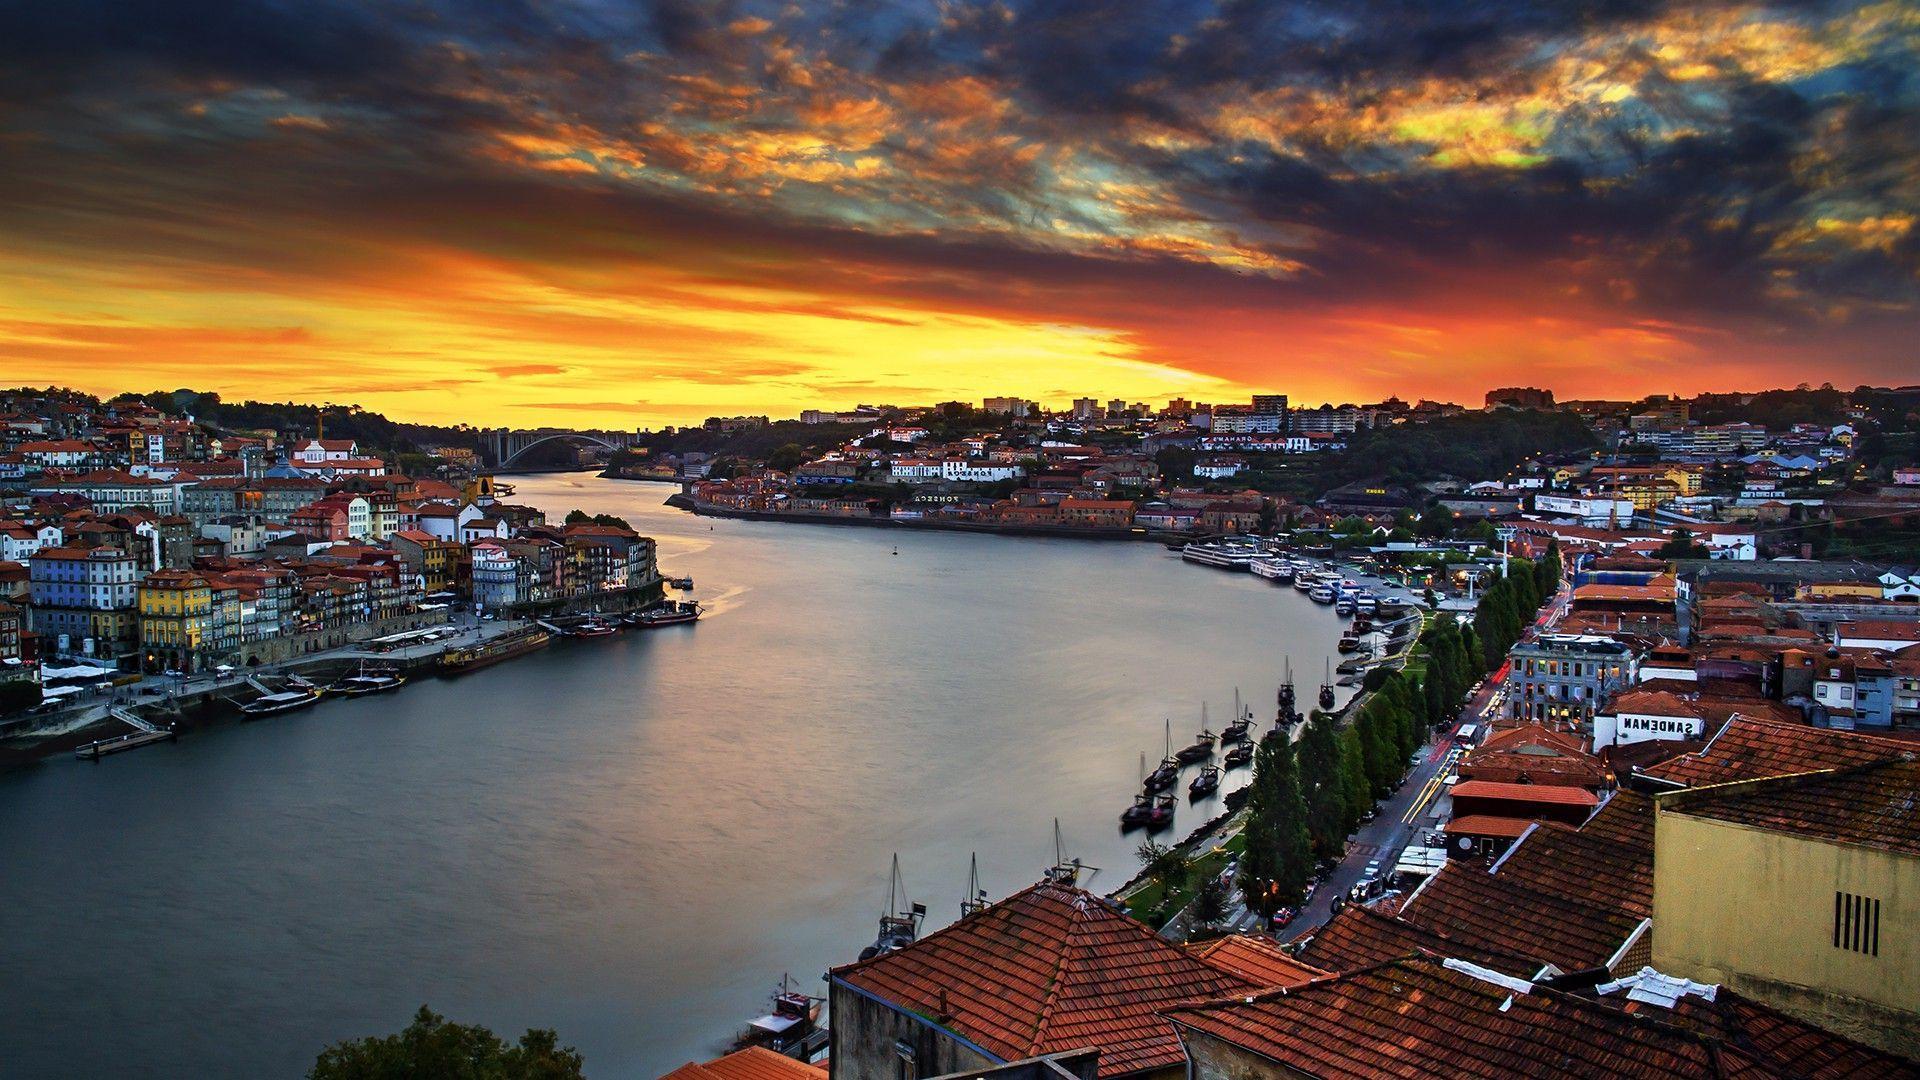 Portugal, Porto, House, River, Sunset, Bridge, Landscape, Boat